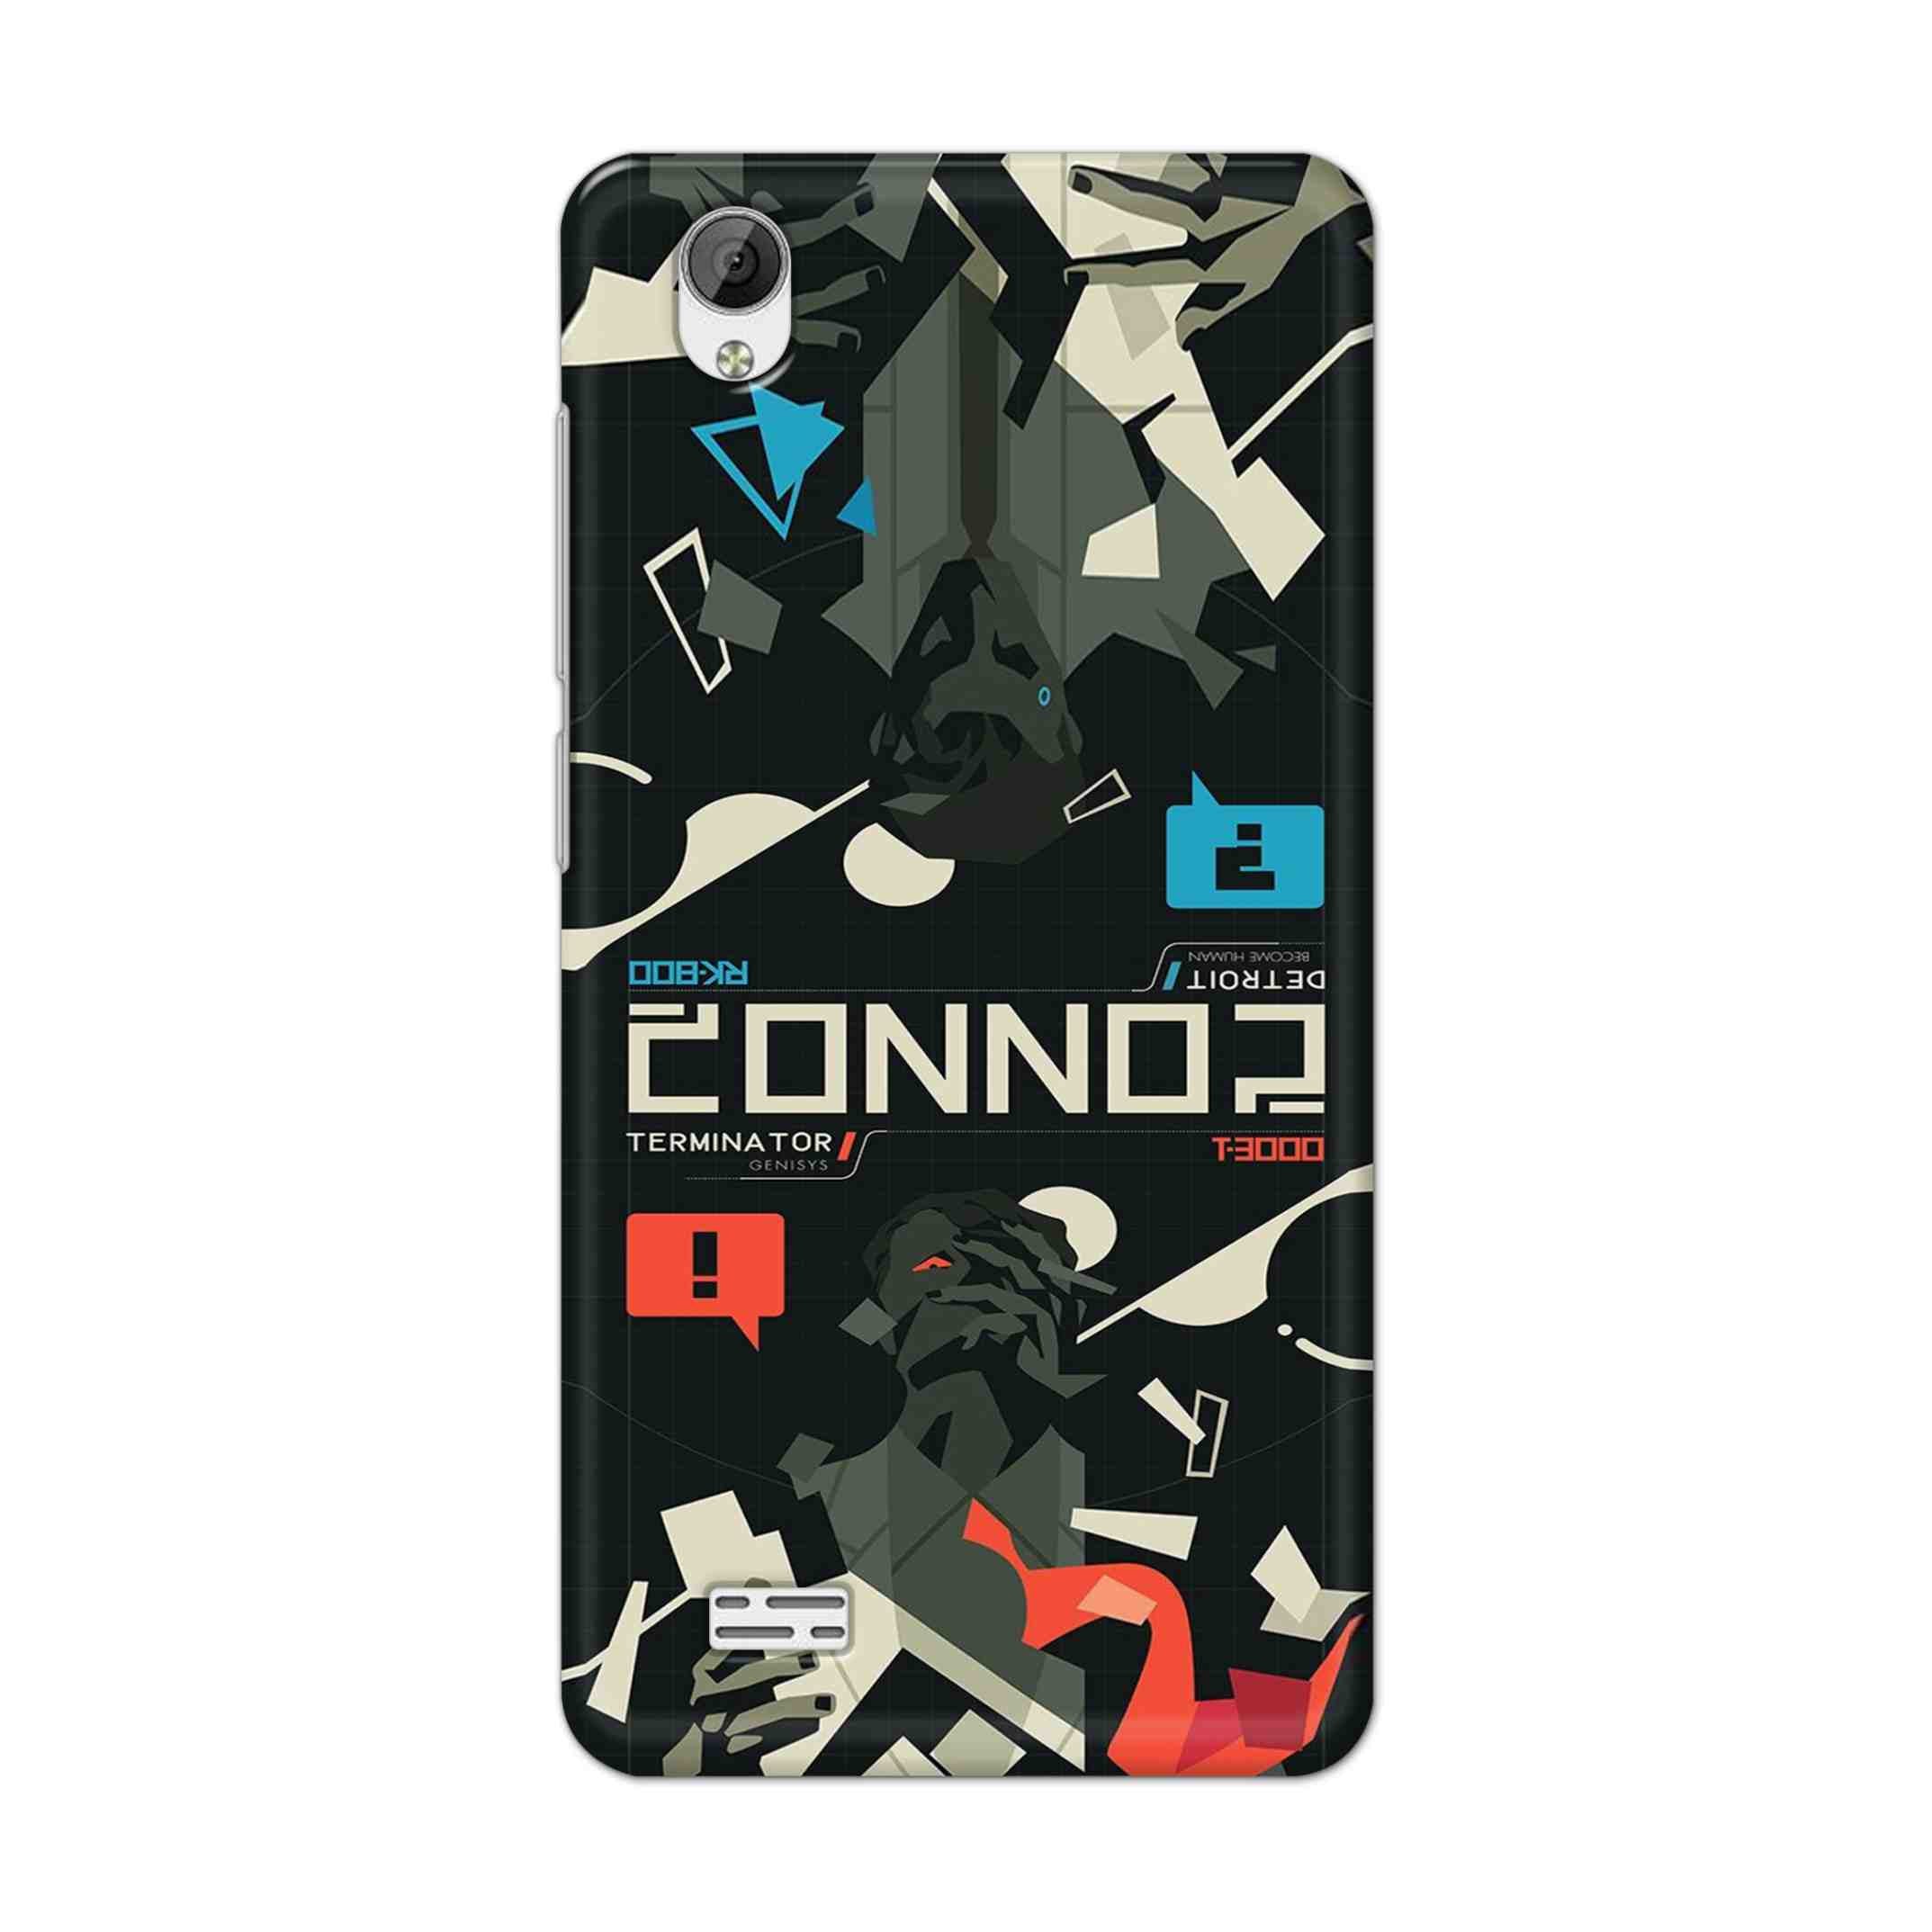 Buy Terminator Hard Back Mobile Phone Case Cover For Vivo Y31 Online